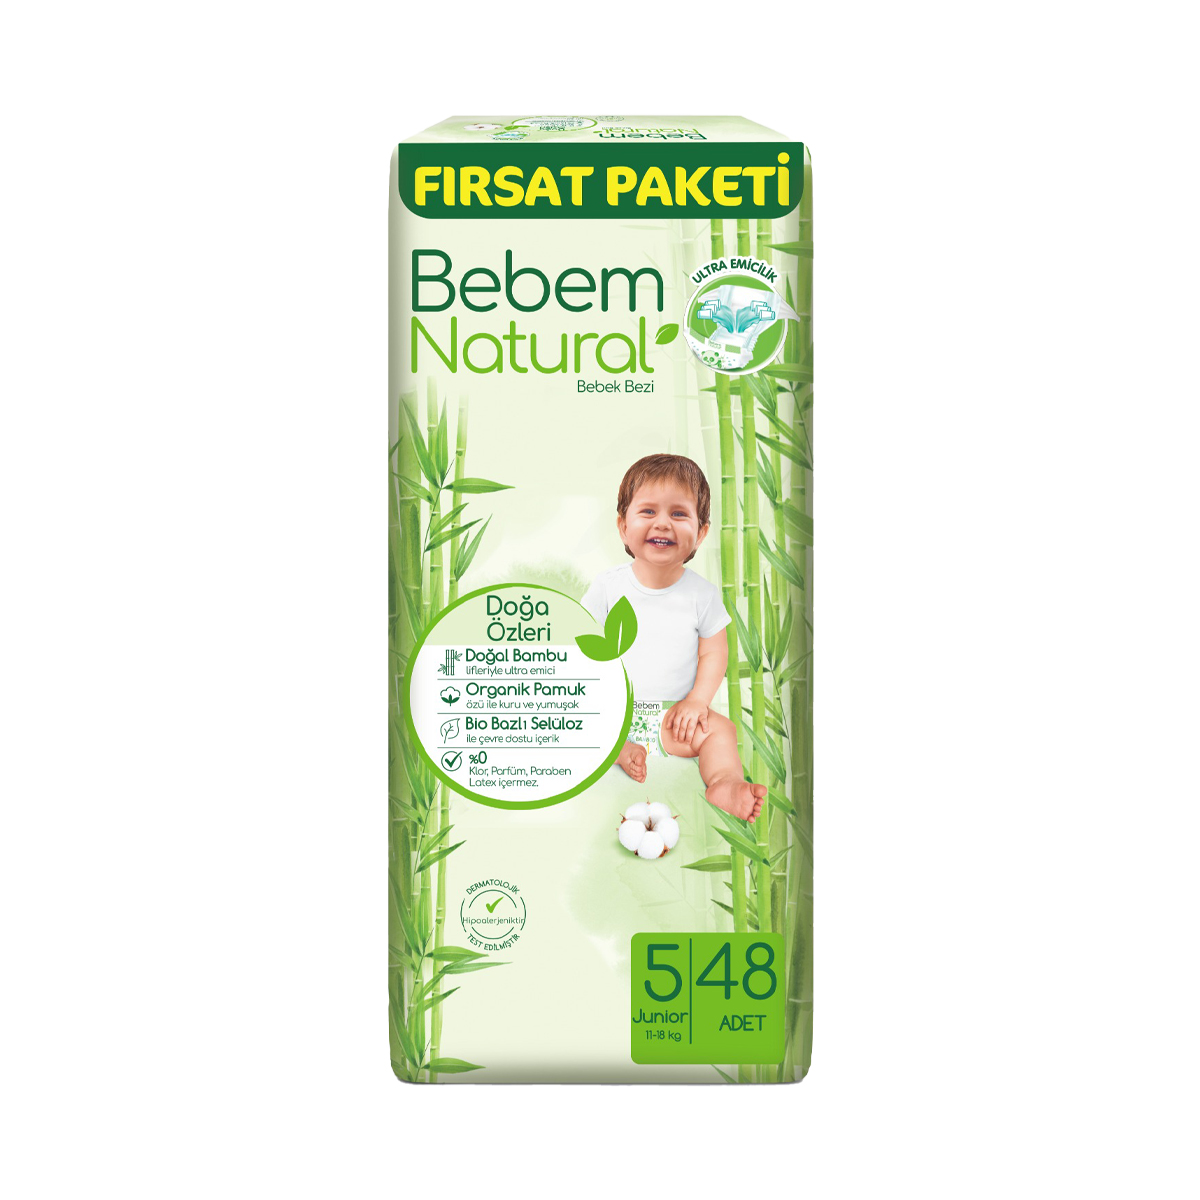 Bebem Natural Fırsat Paketi Junıor 5 Numara Bebek Bezi 48 li